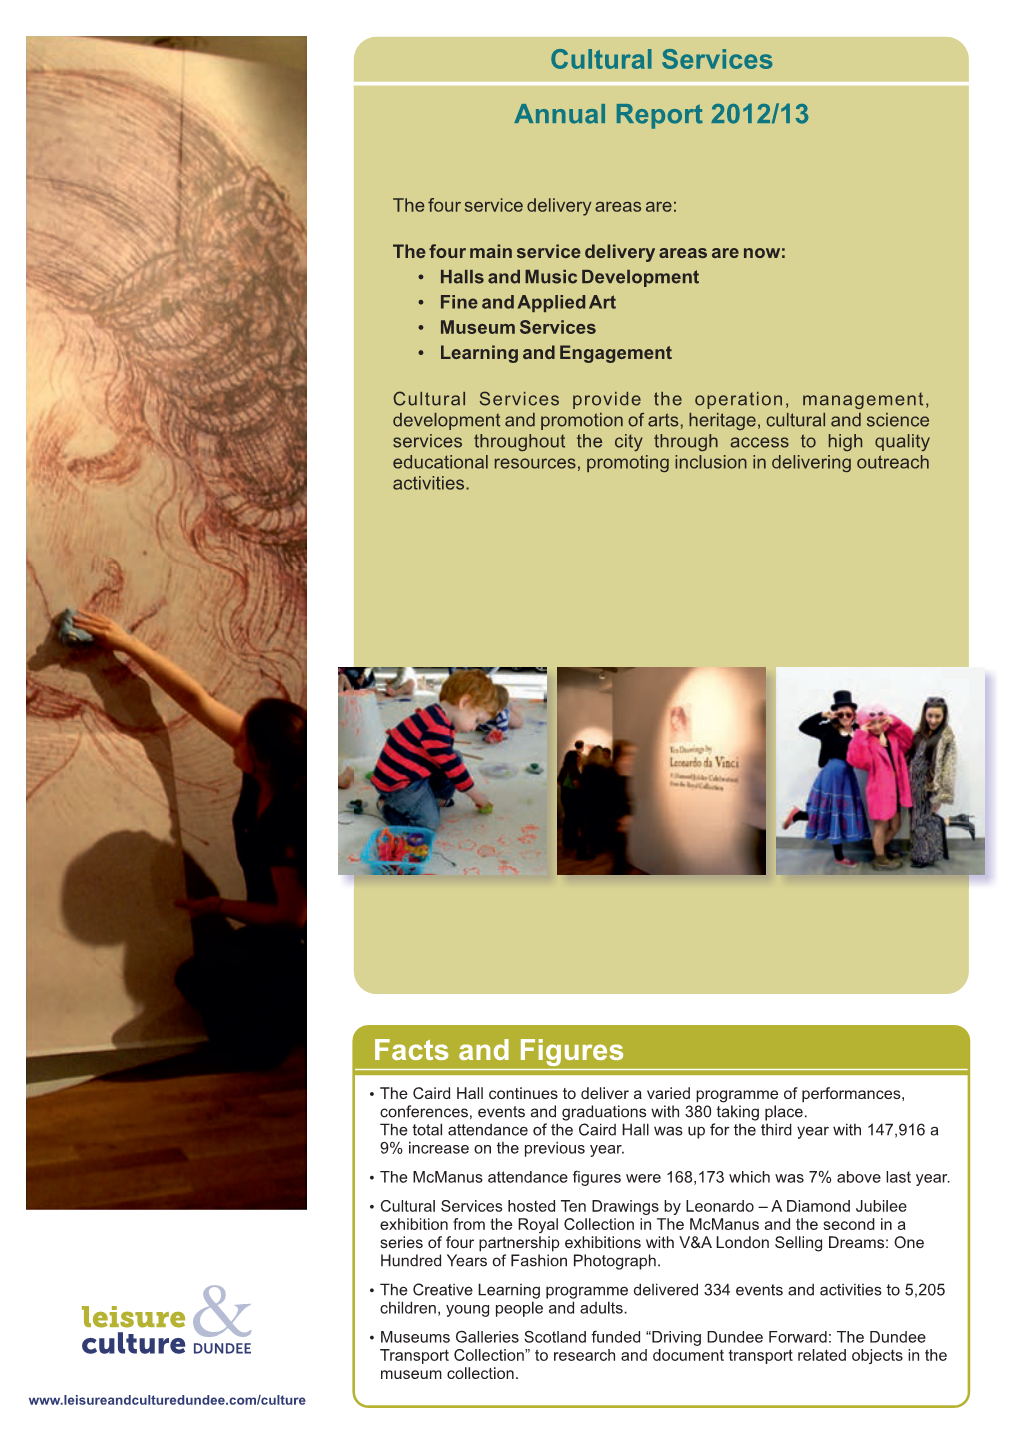 Cultural Services Annual Report 2012/13